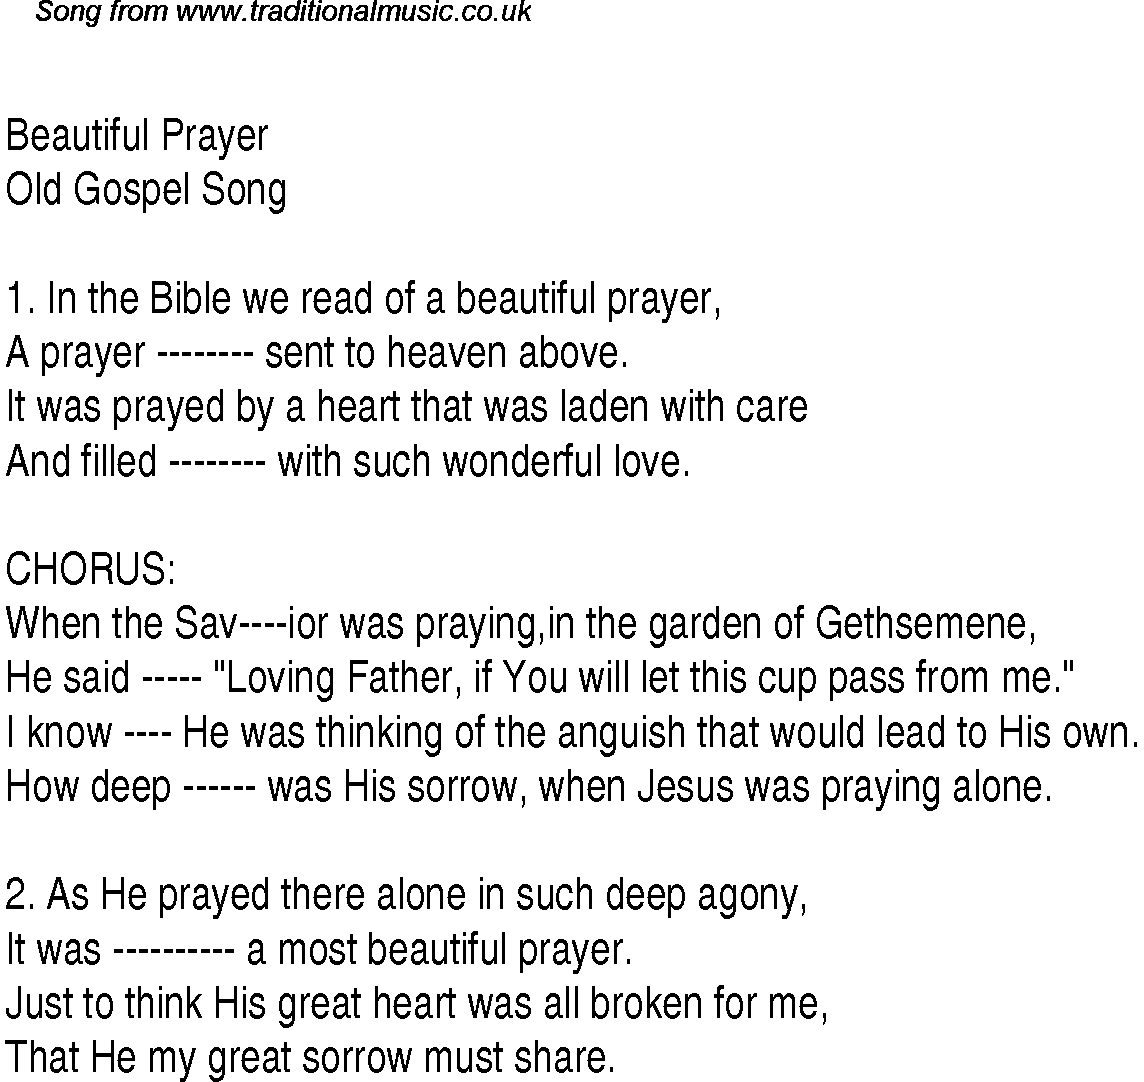 Gospel Song: beautiful-prayer, lyrics and chords.